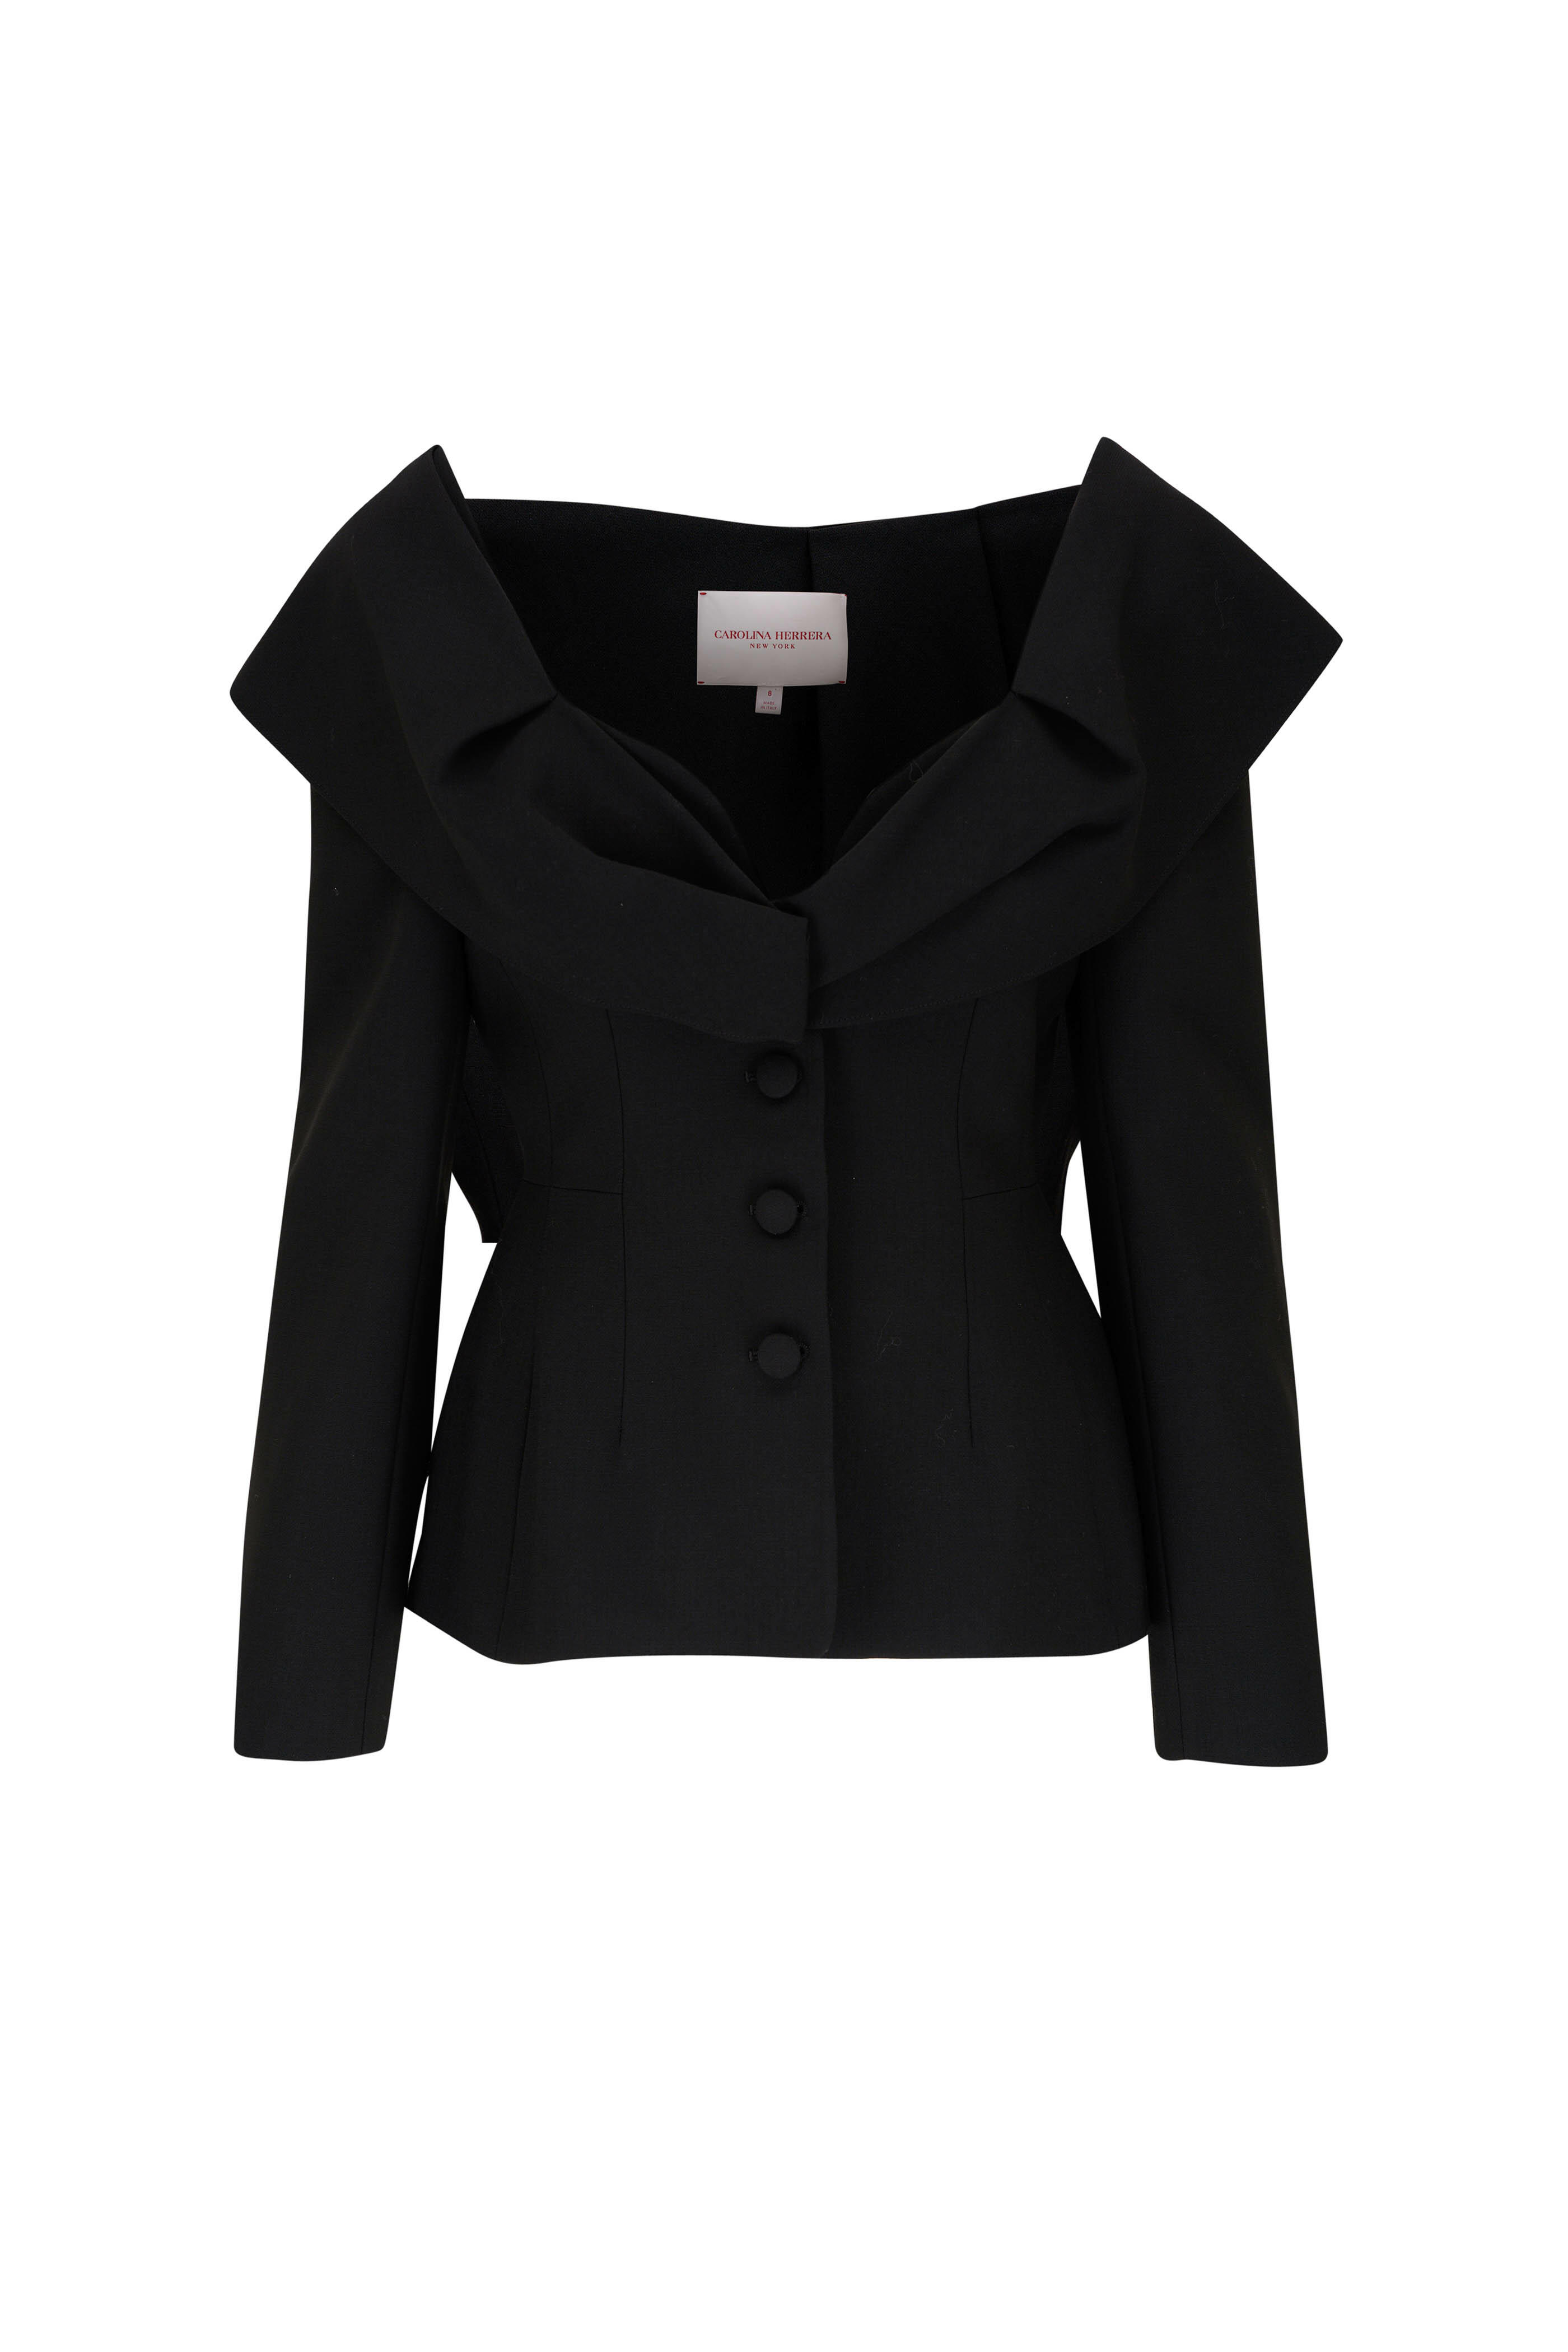 Carolina Herrera - Black Structured Drape Wool Jacket